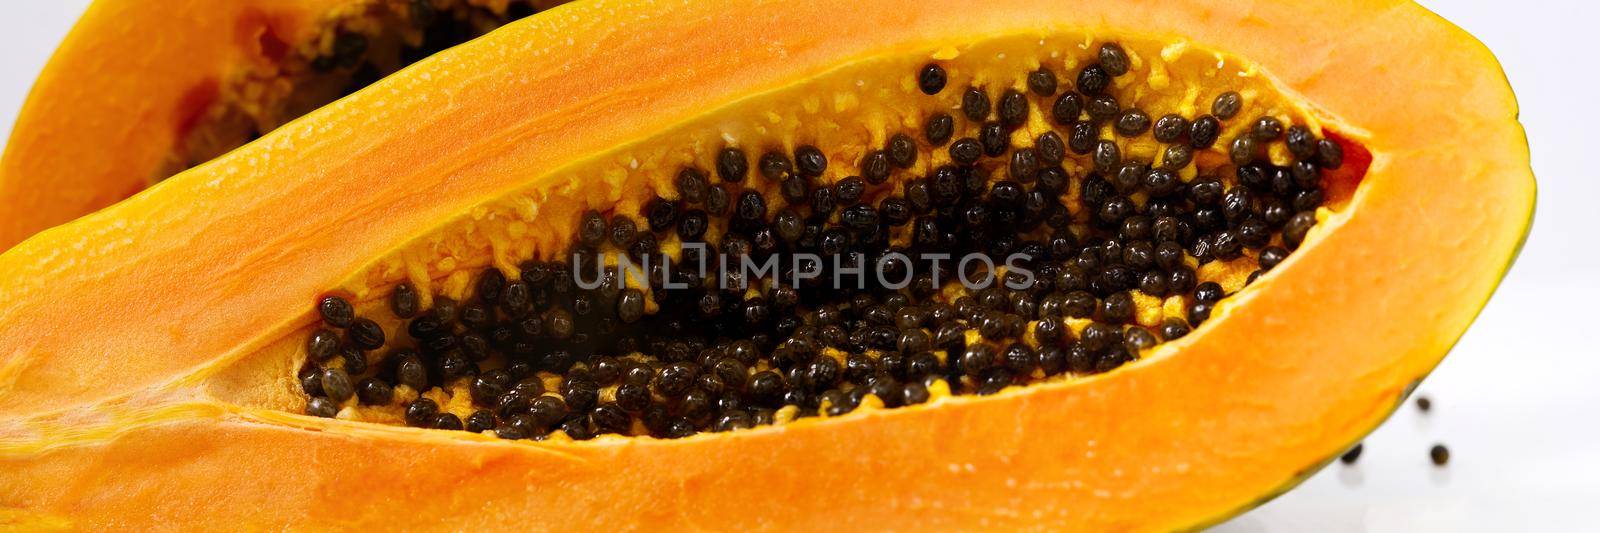 papaya isolate on white. delicious ripe papaya cut in half close-up by PhotoTime